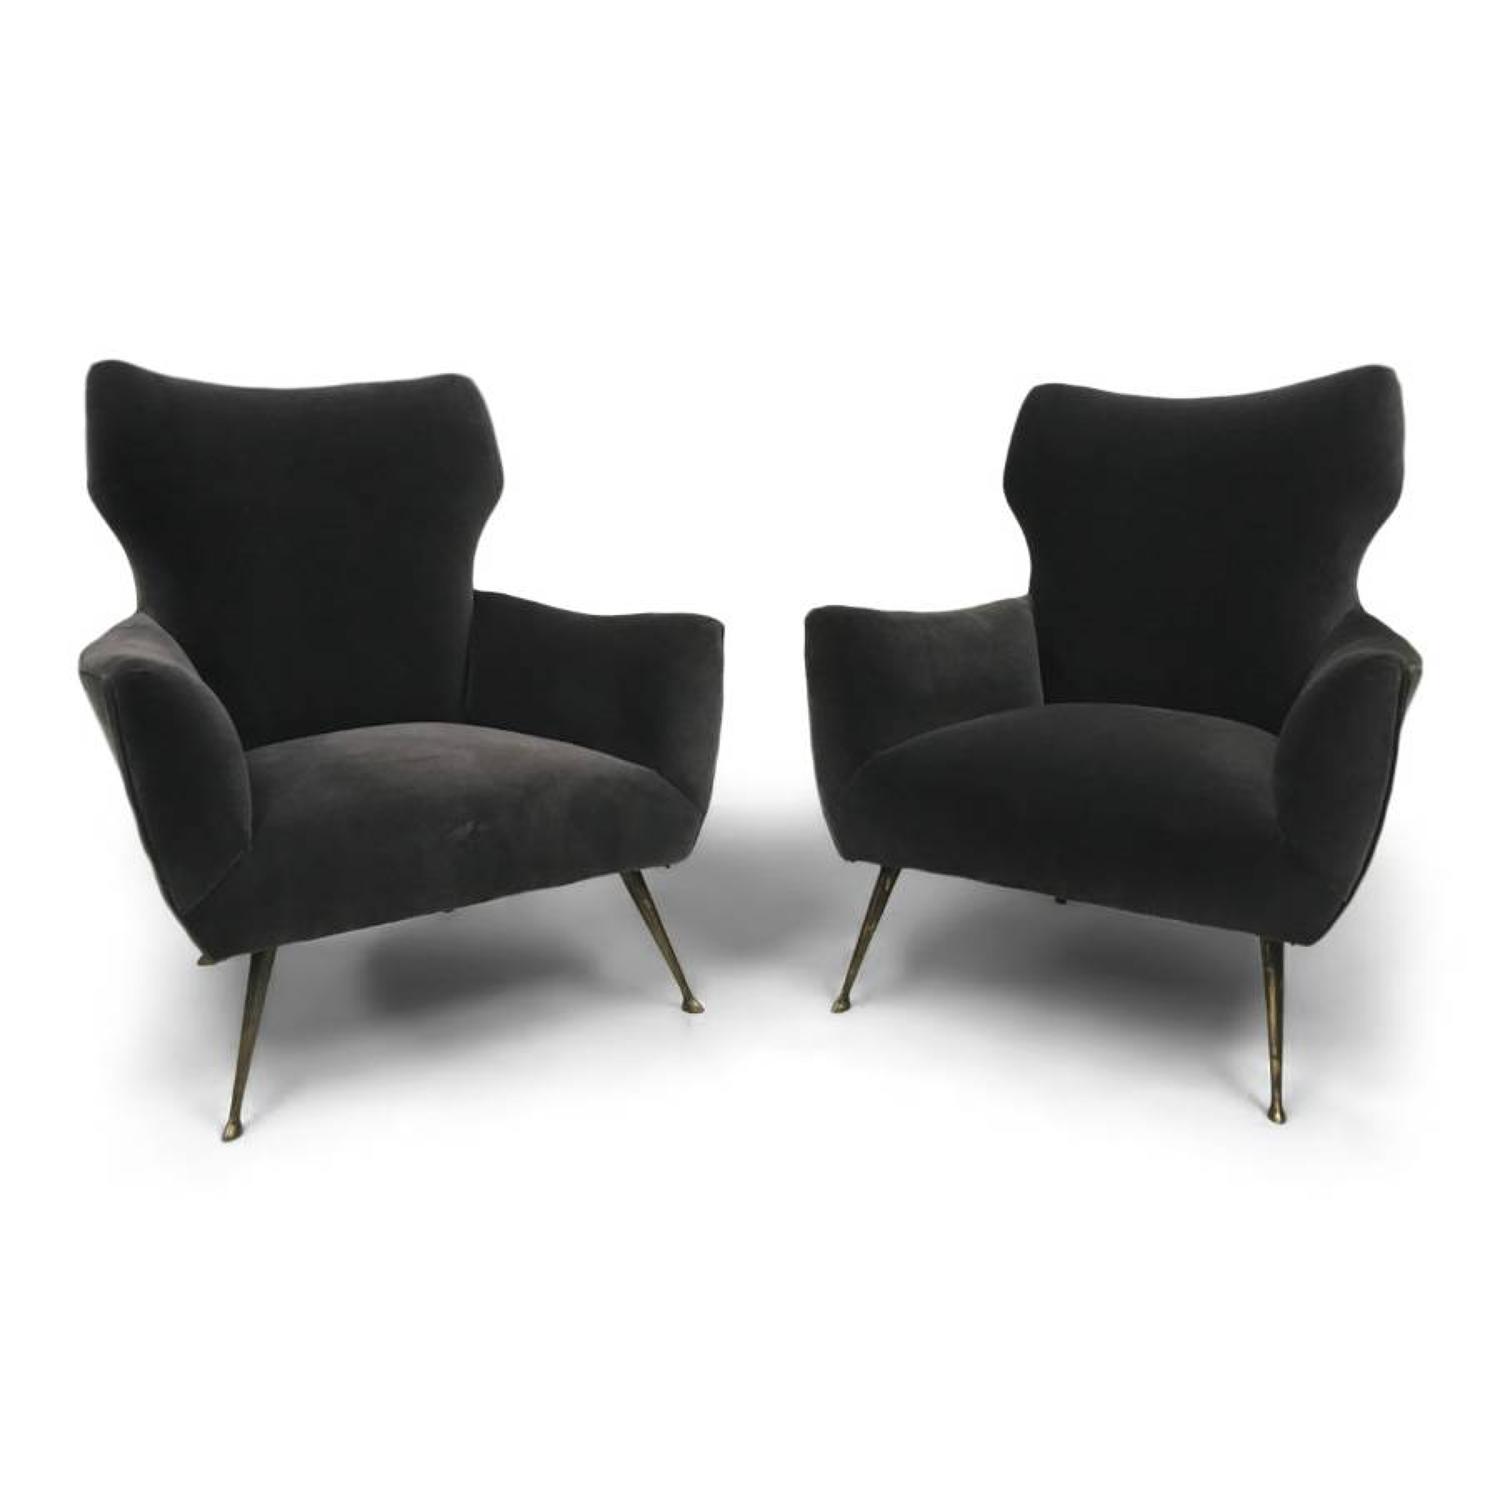 A pair of 1950s Italian armchairs in grey velvet